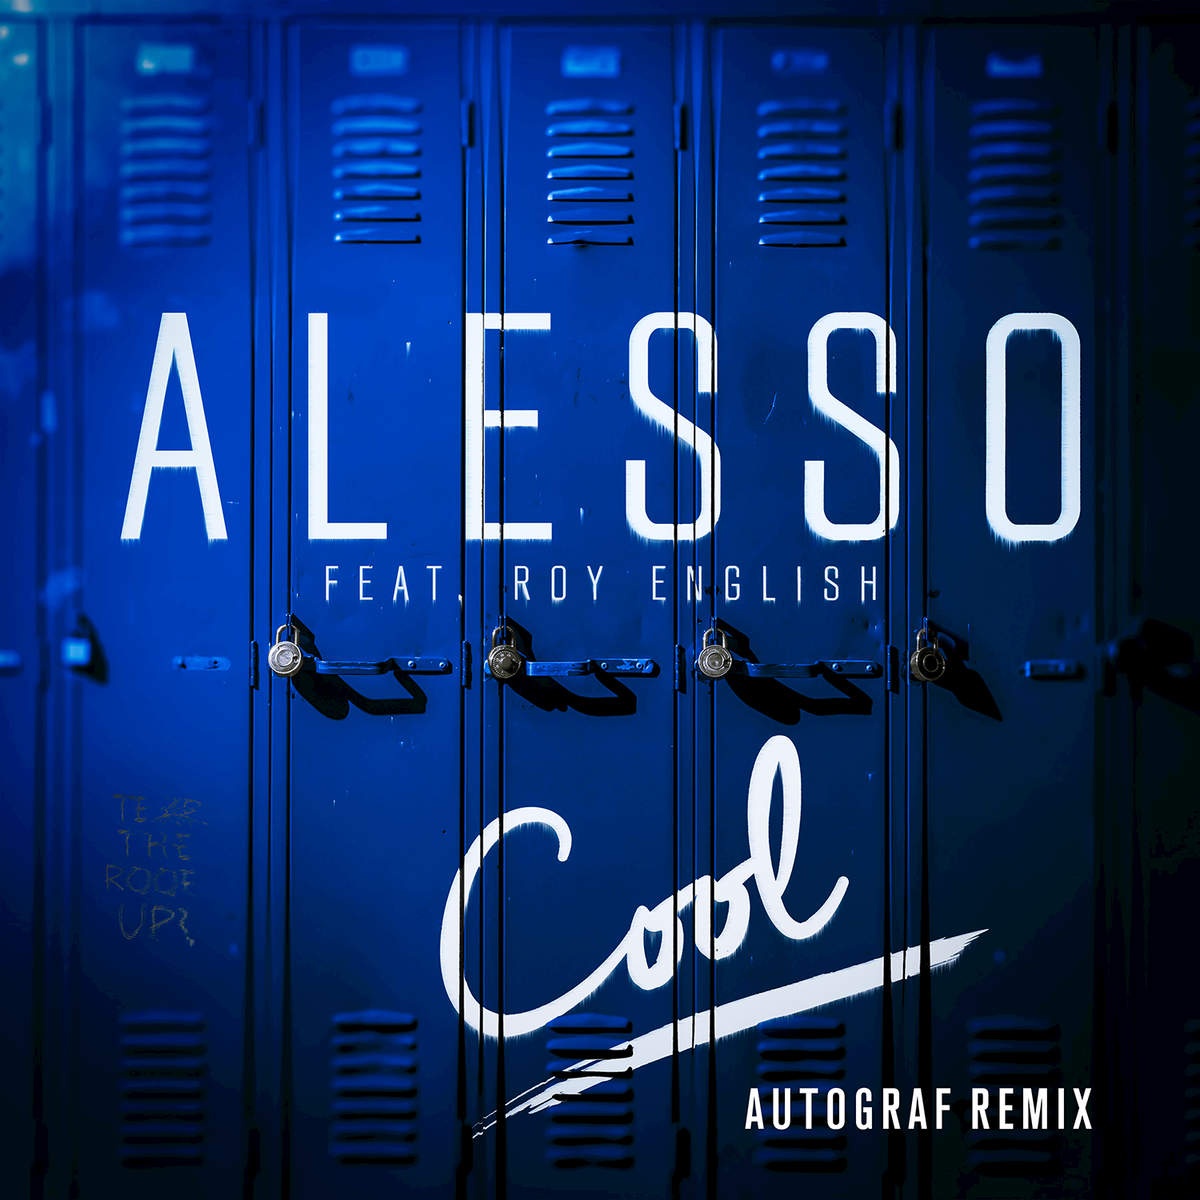 Cool (Autograf Remix) [feat. Roy English] 